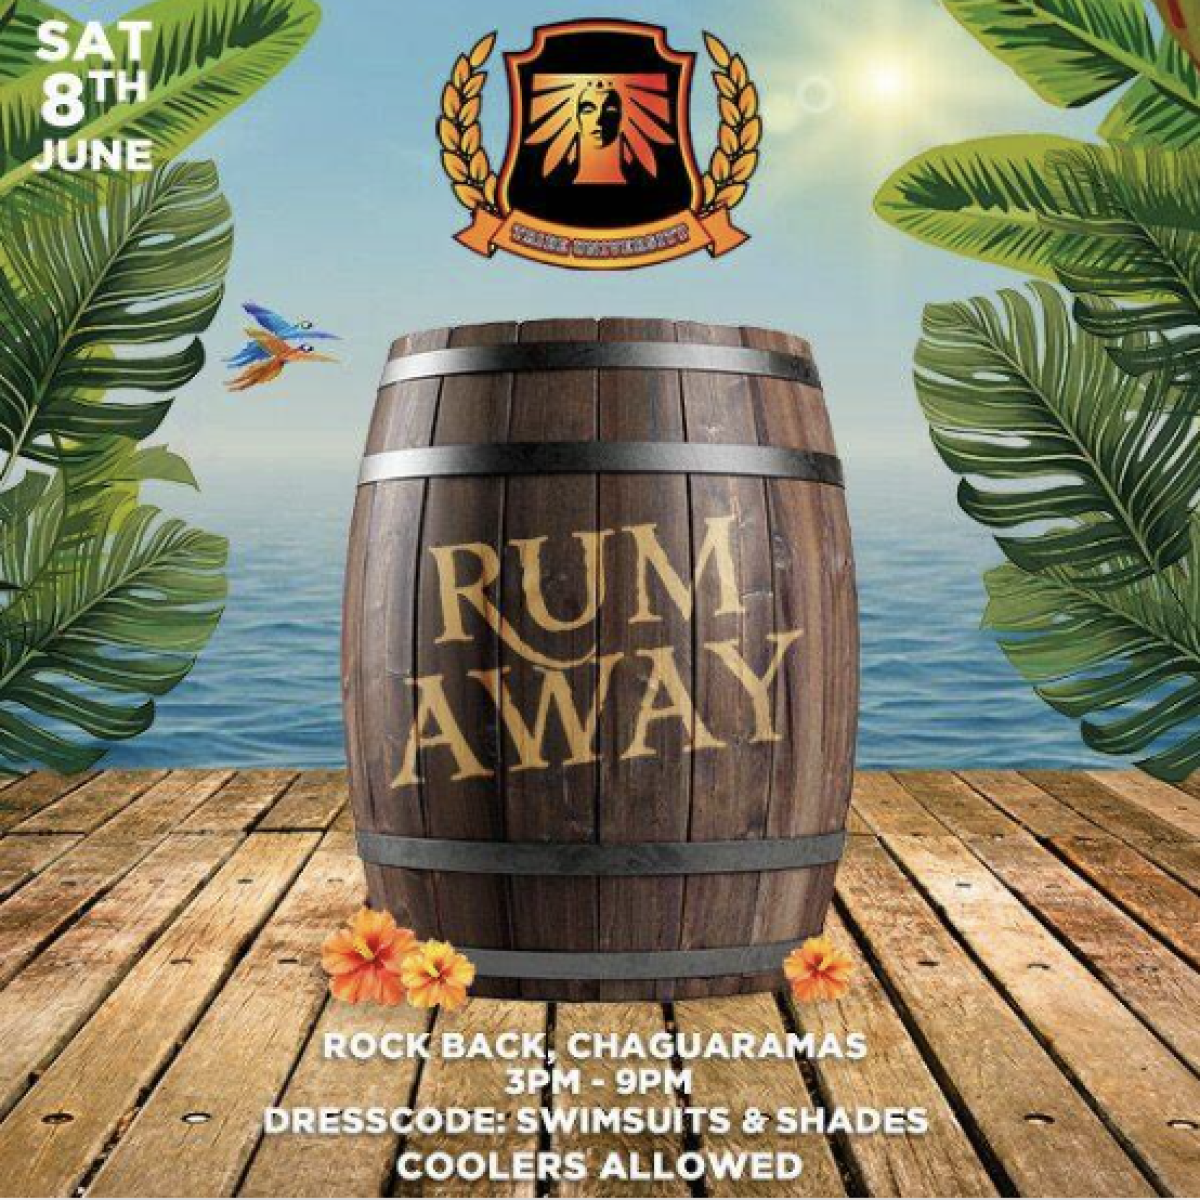 Rum Away flyer or graphic.